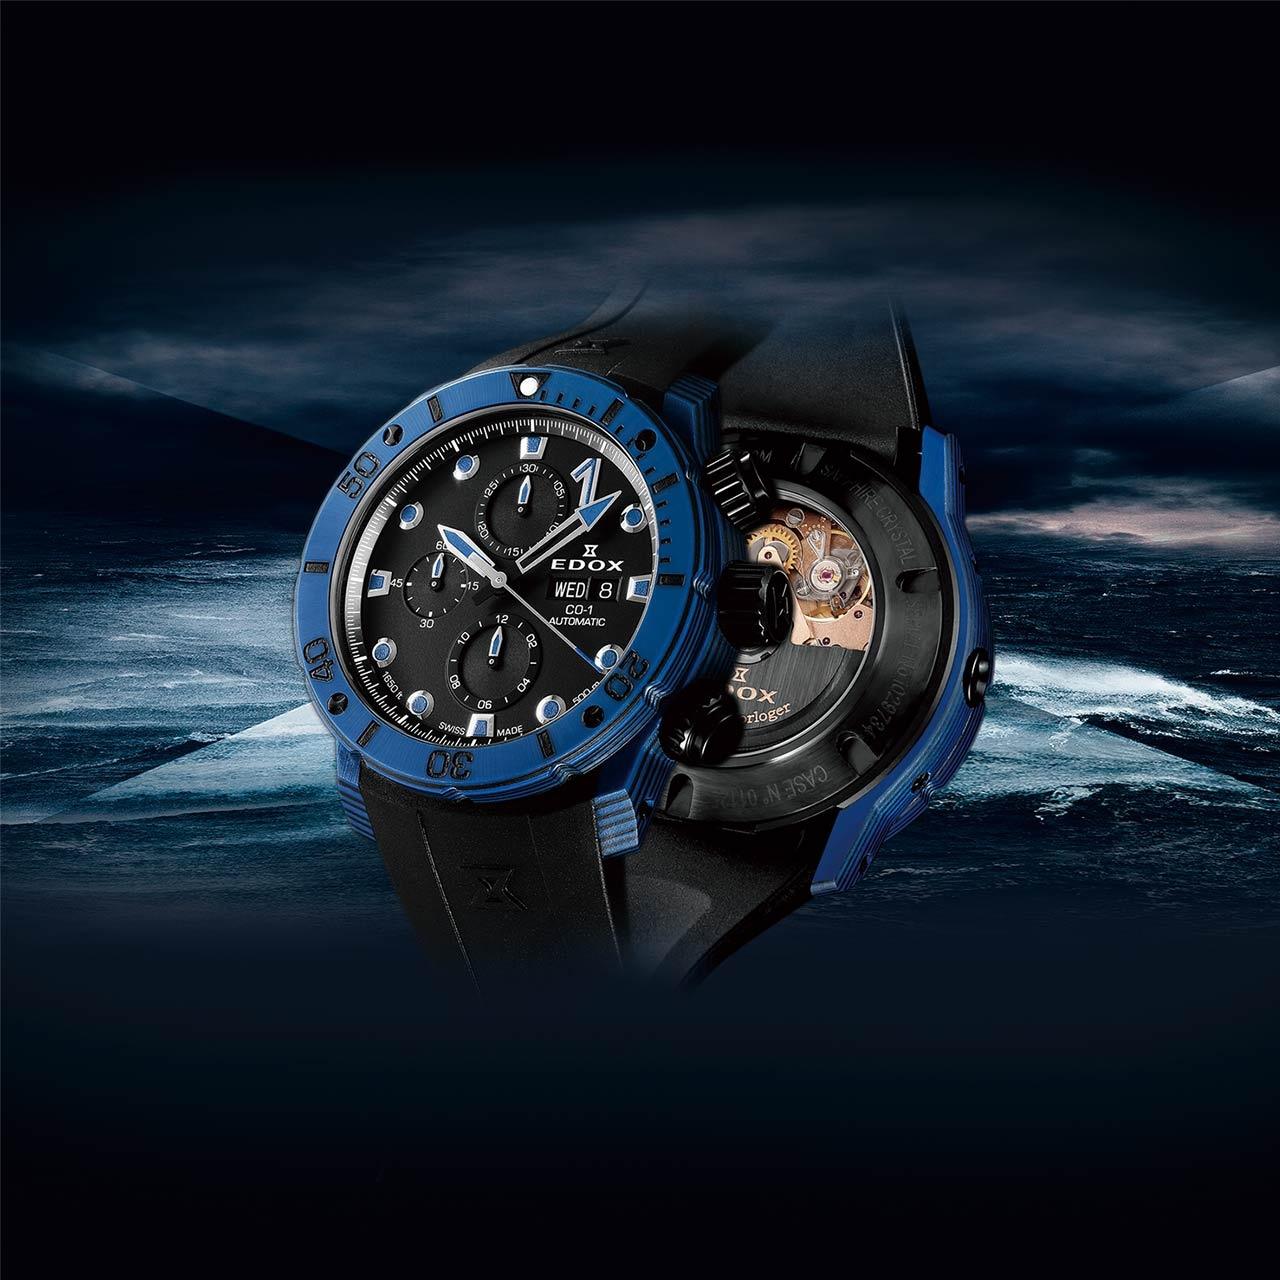 EDOX メンズ腕時計 クロノオフショア1 カーボン ラバー 自動巻き